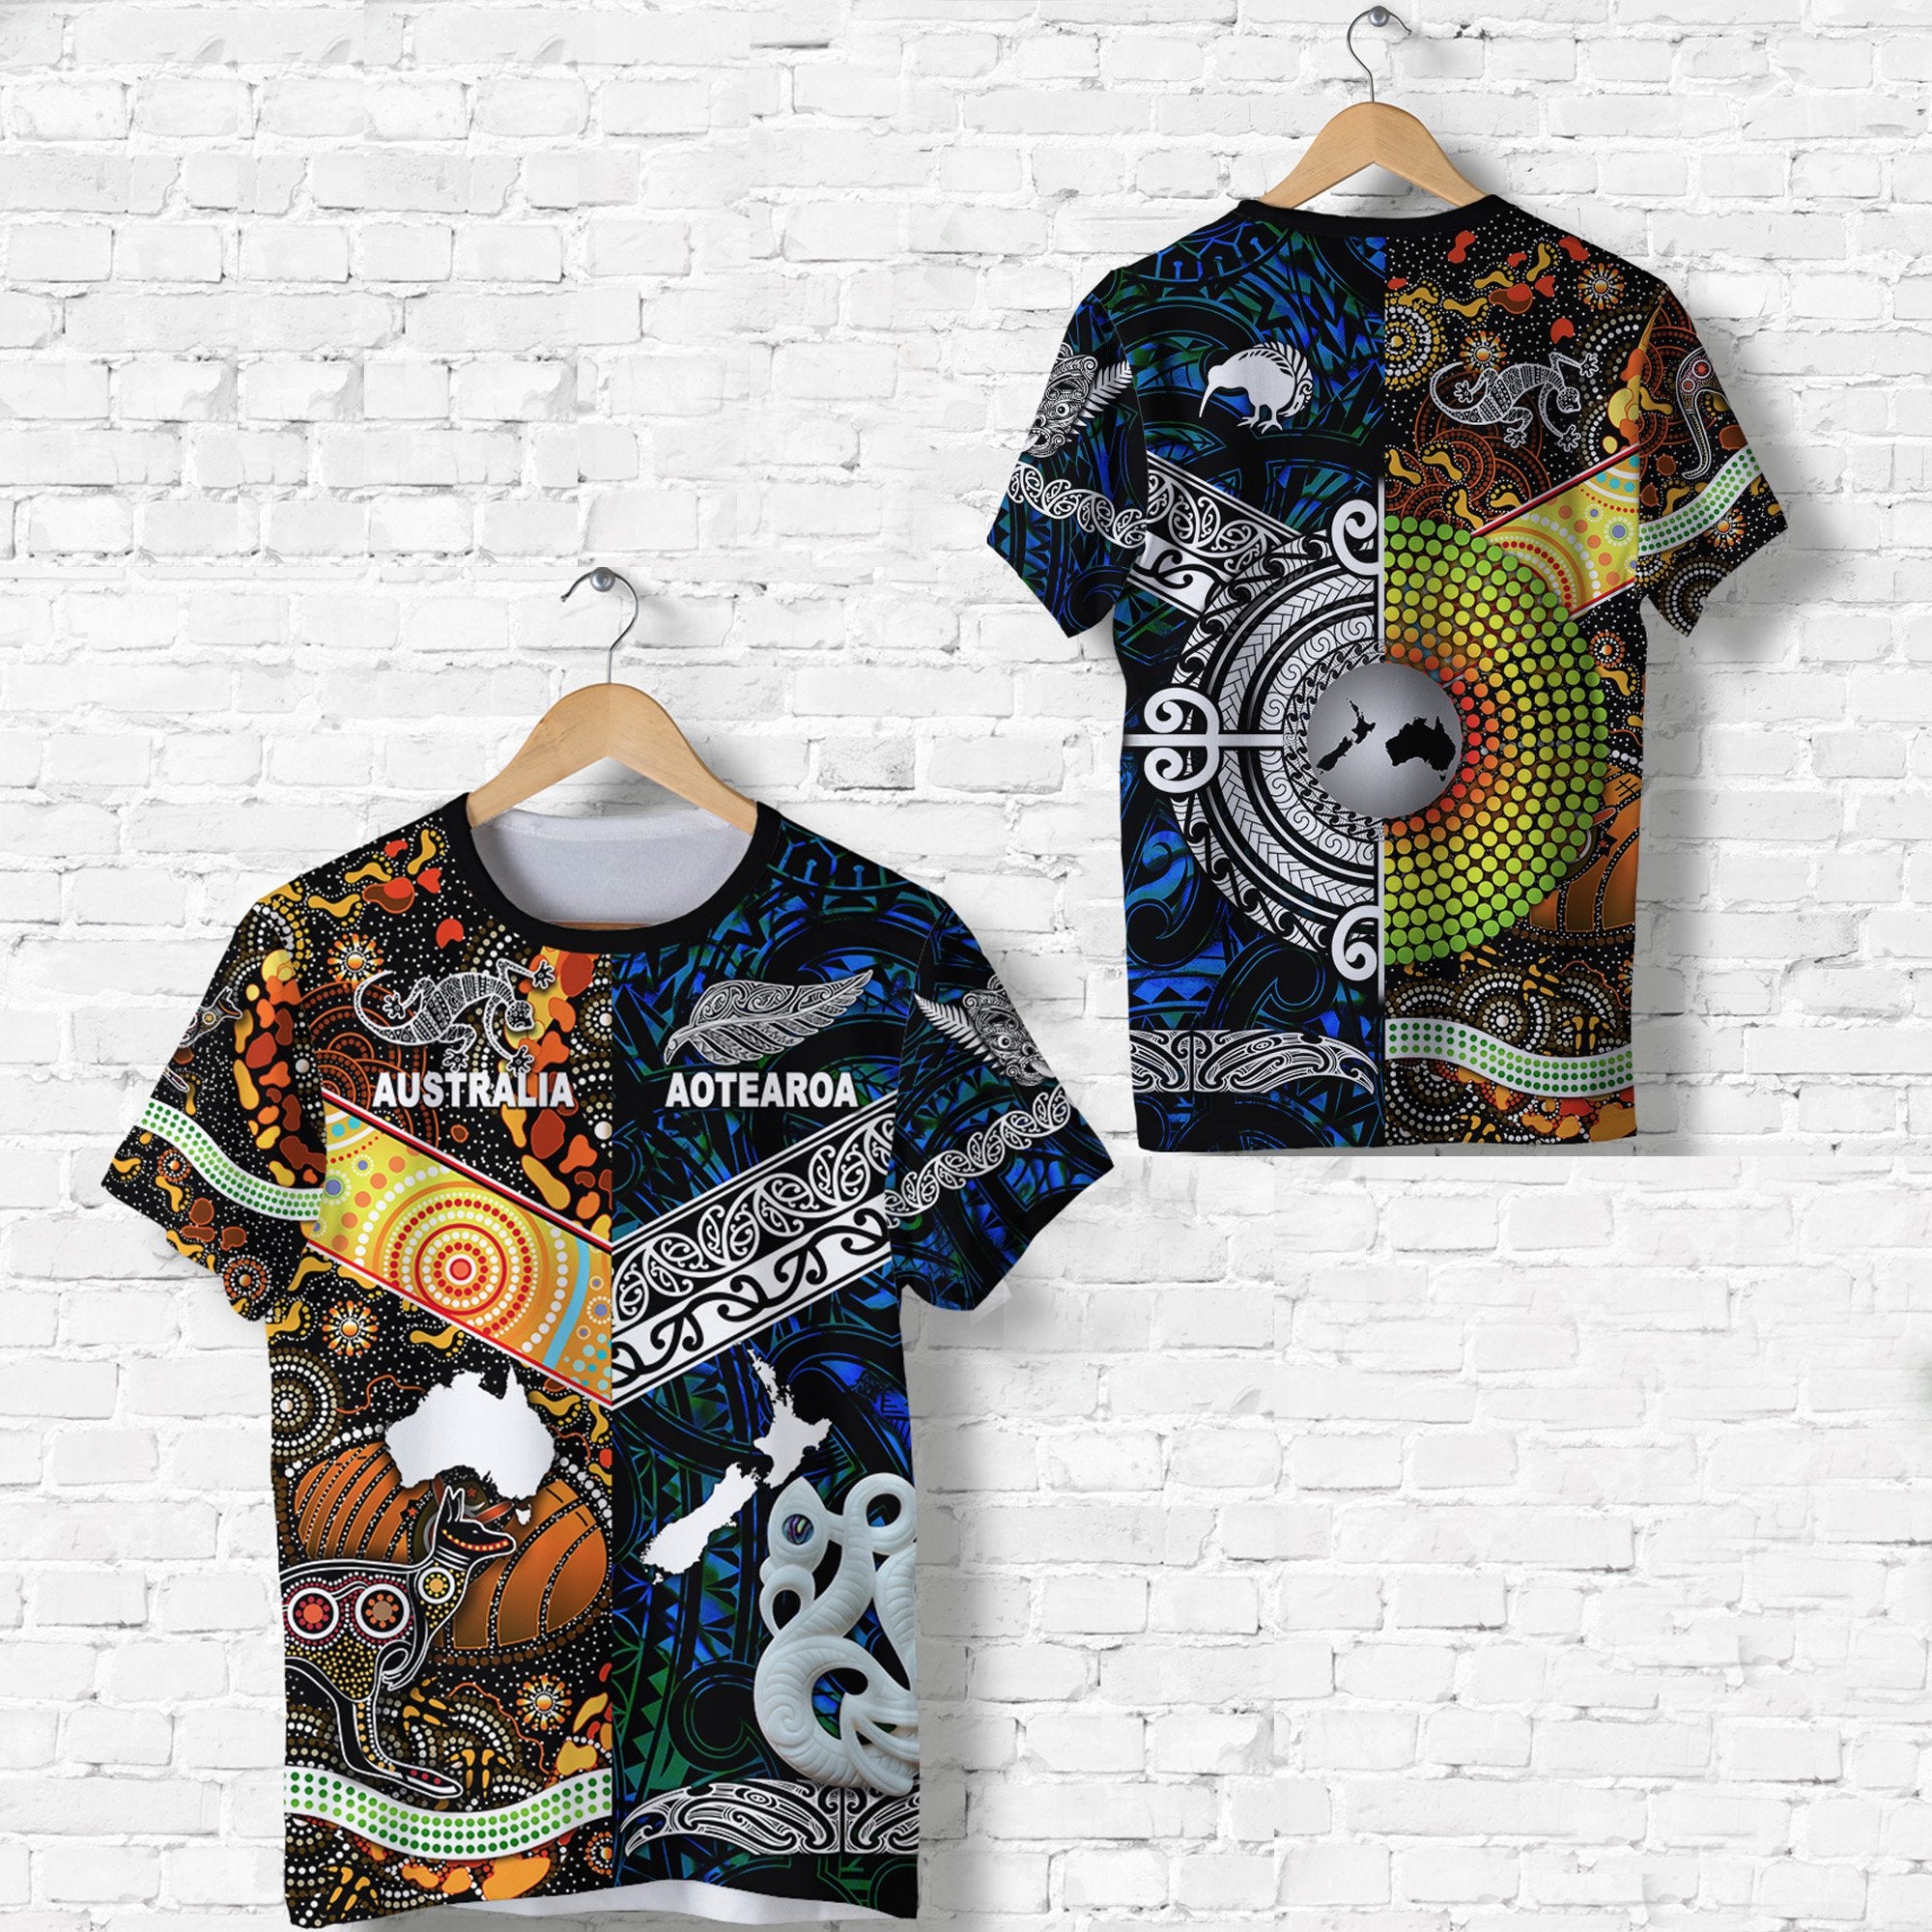 Australia Aboriginal Inspired T-Shirt - Australia Aotearoa with Maori and Aboriginal Inspired Culture T-Shirt LT8